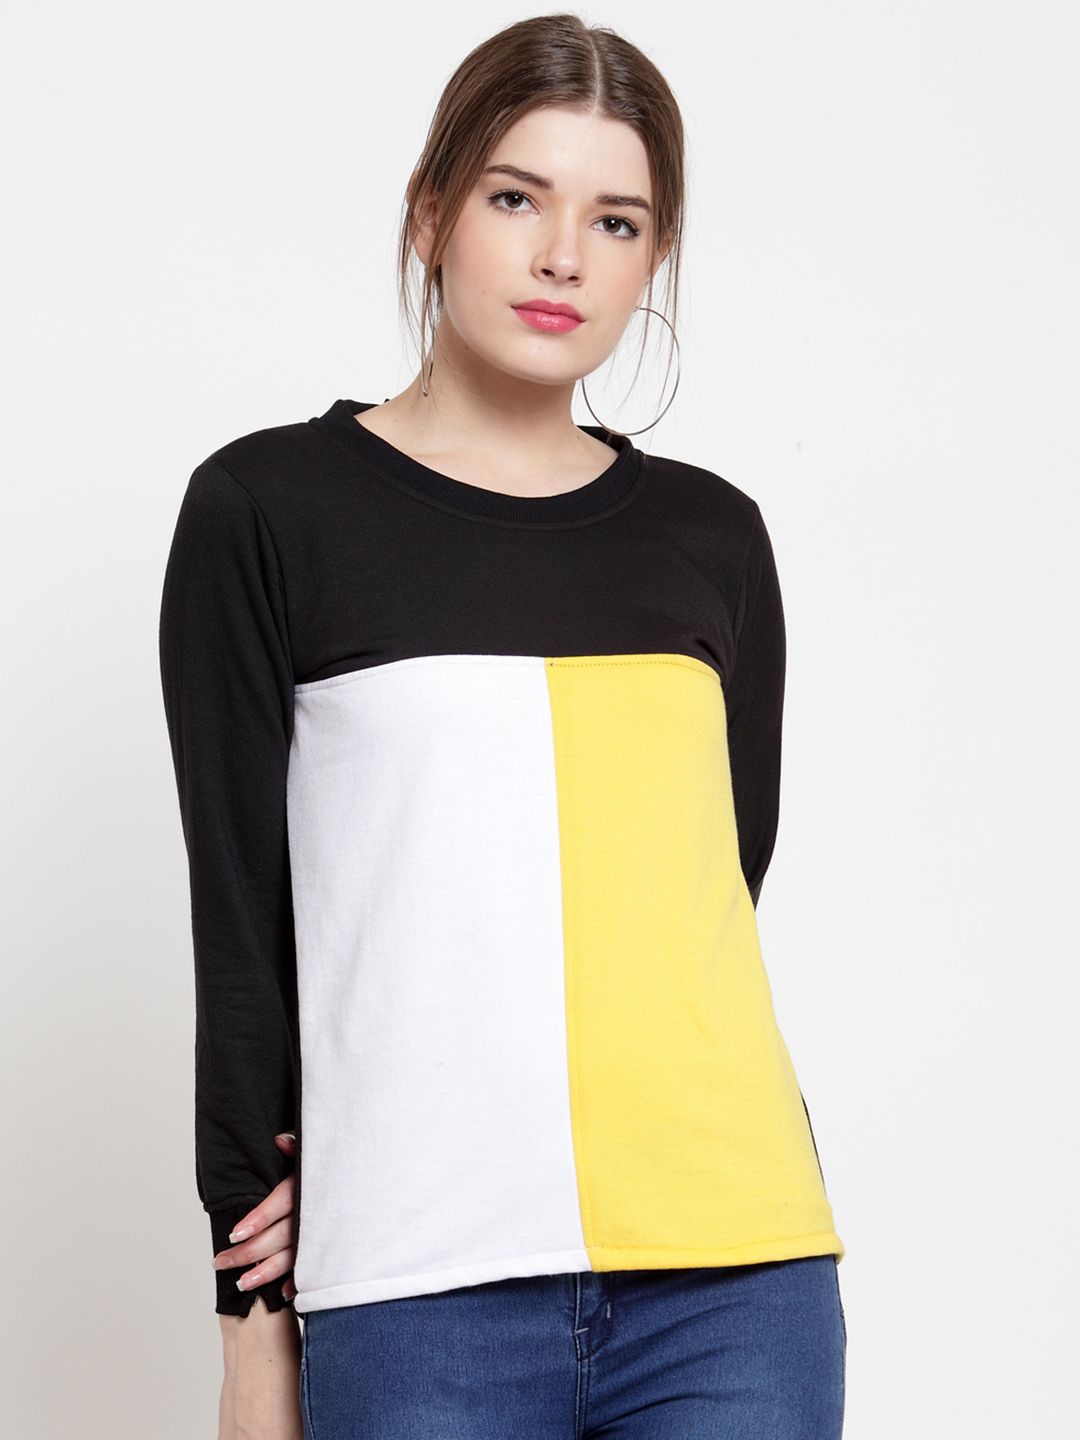 Belle Fille Women Black & Yellow Colourblocked Sweatshirt Price in India